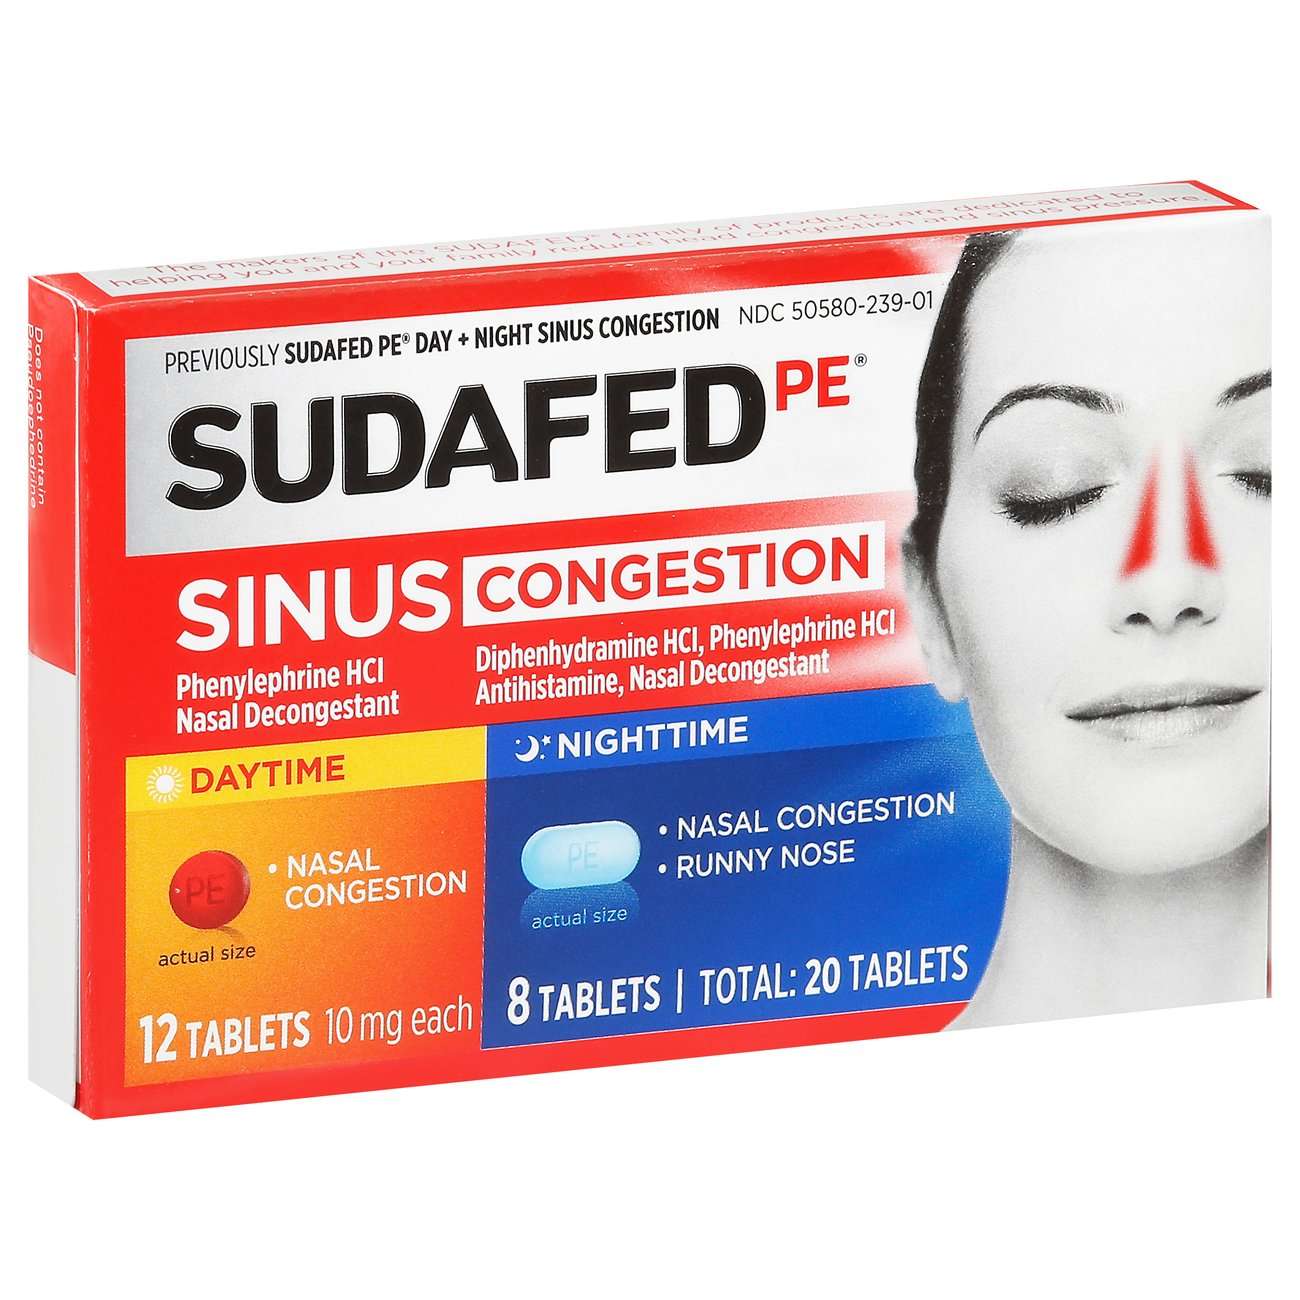 Sudafed PE Sinus Congestion Day + Night Tablets